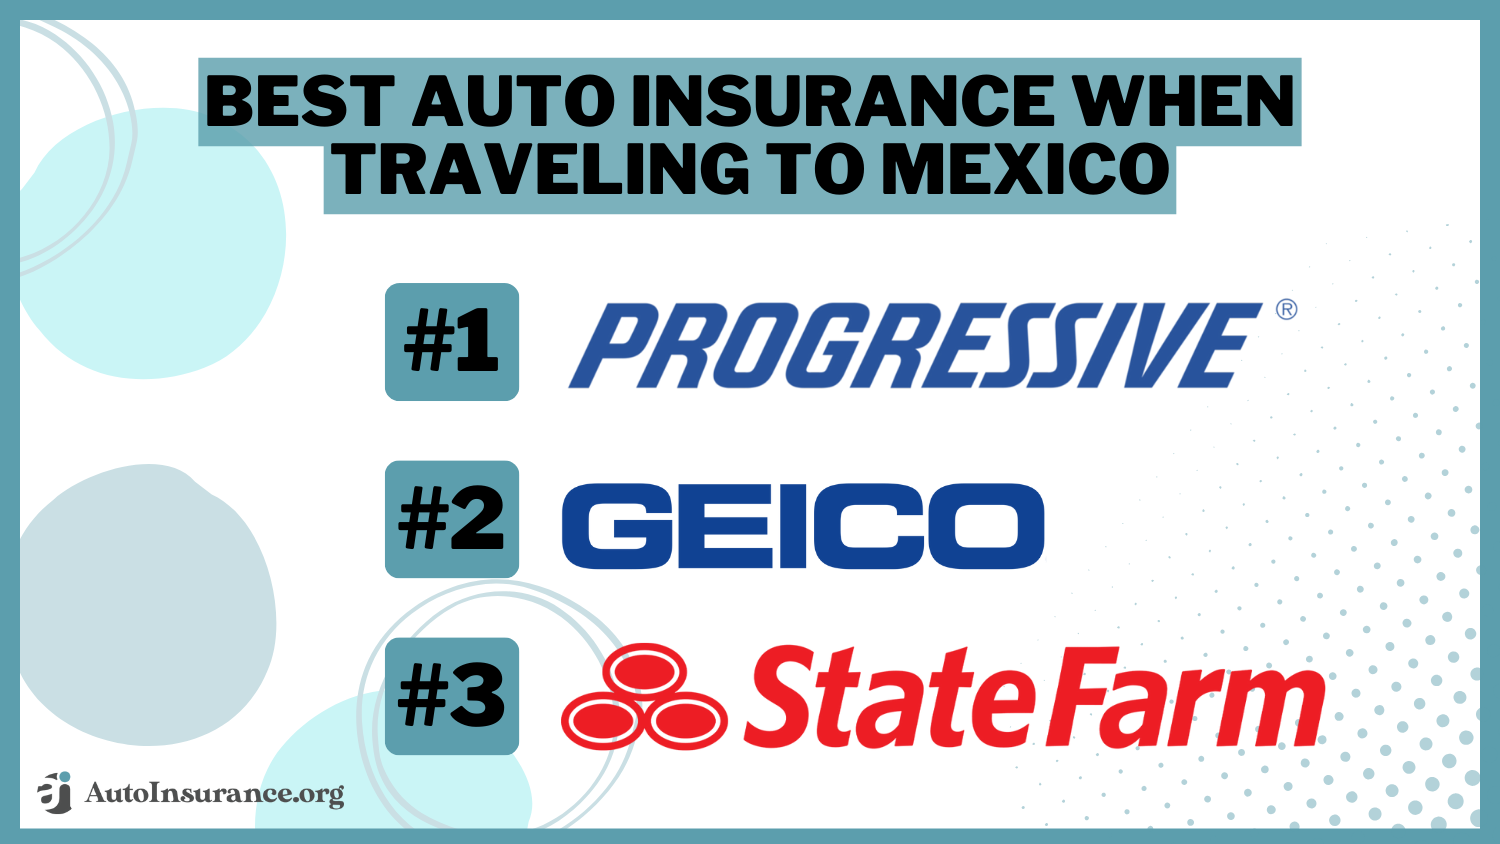 best auto insurance when traveling to Mexico: Progressive, Geico, State Farm